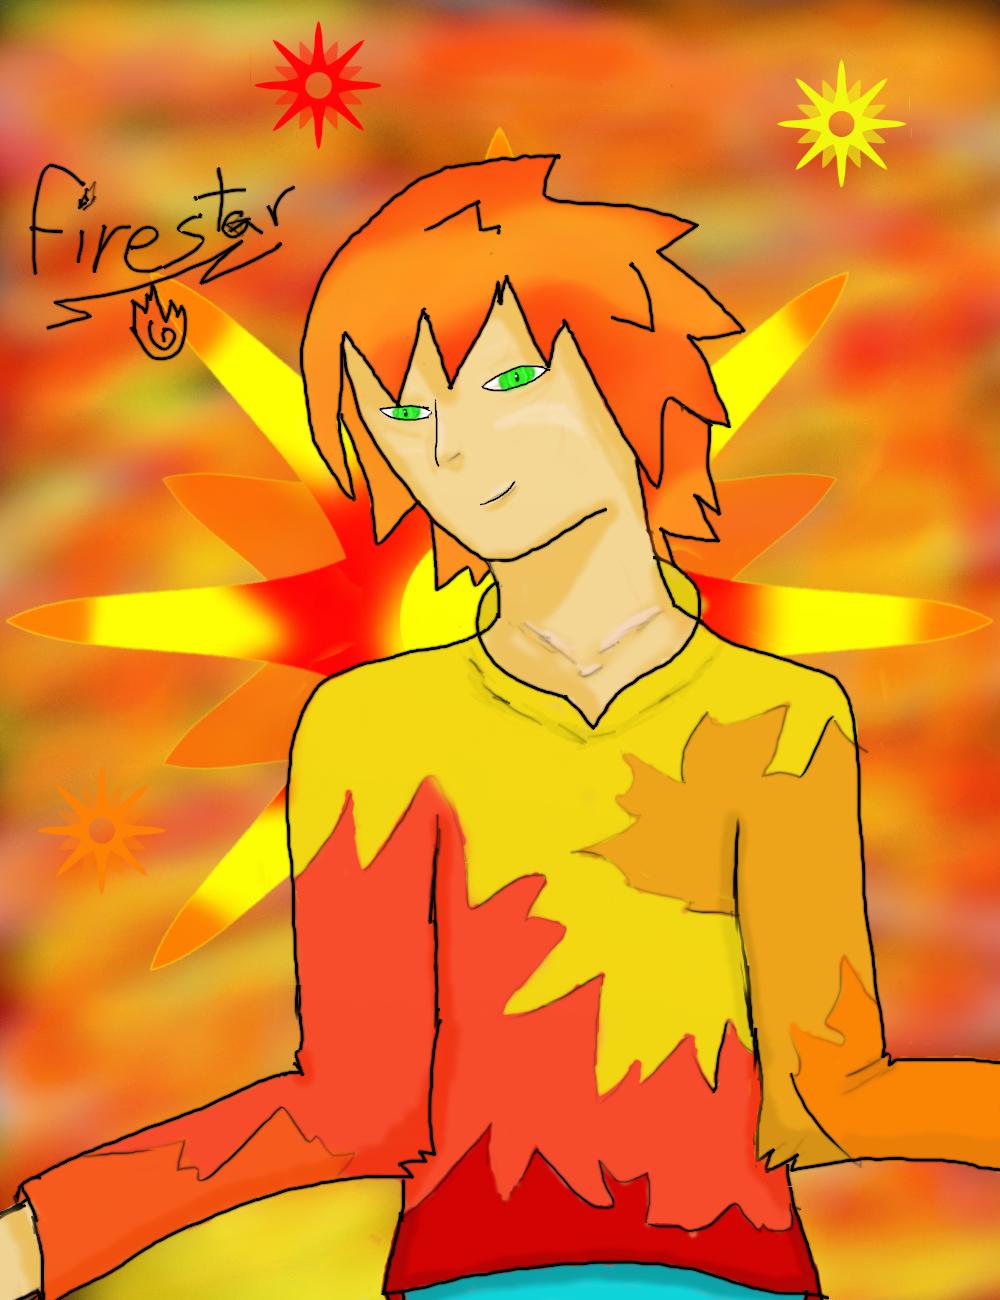 Firestar as a human by Wishsayer